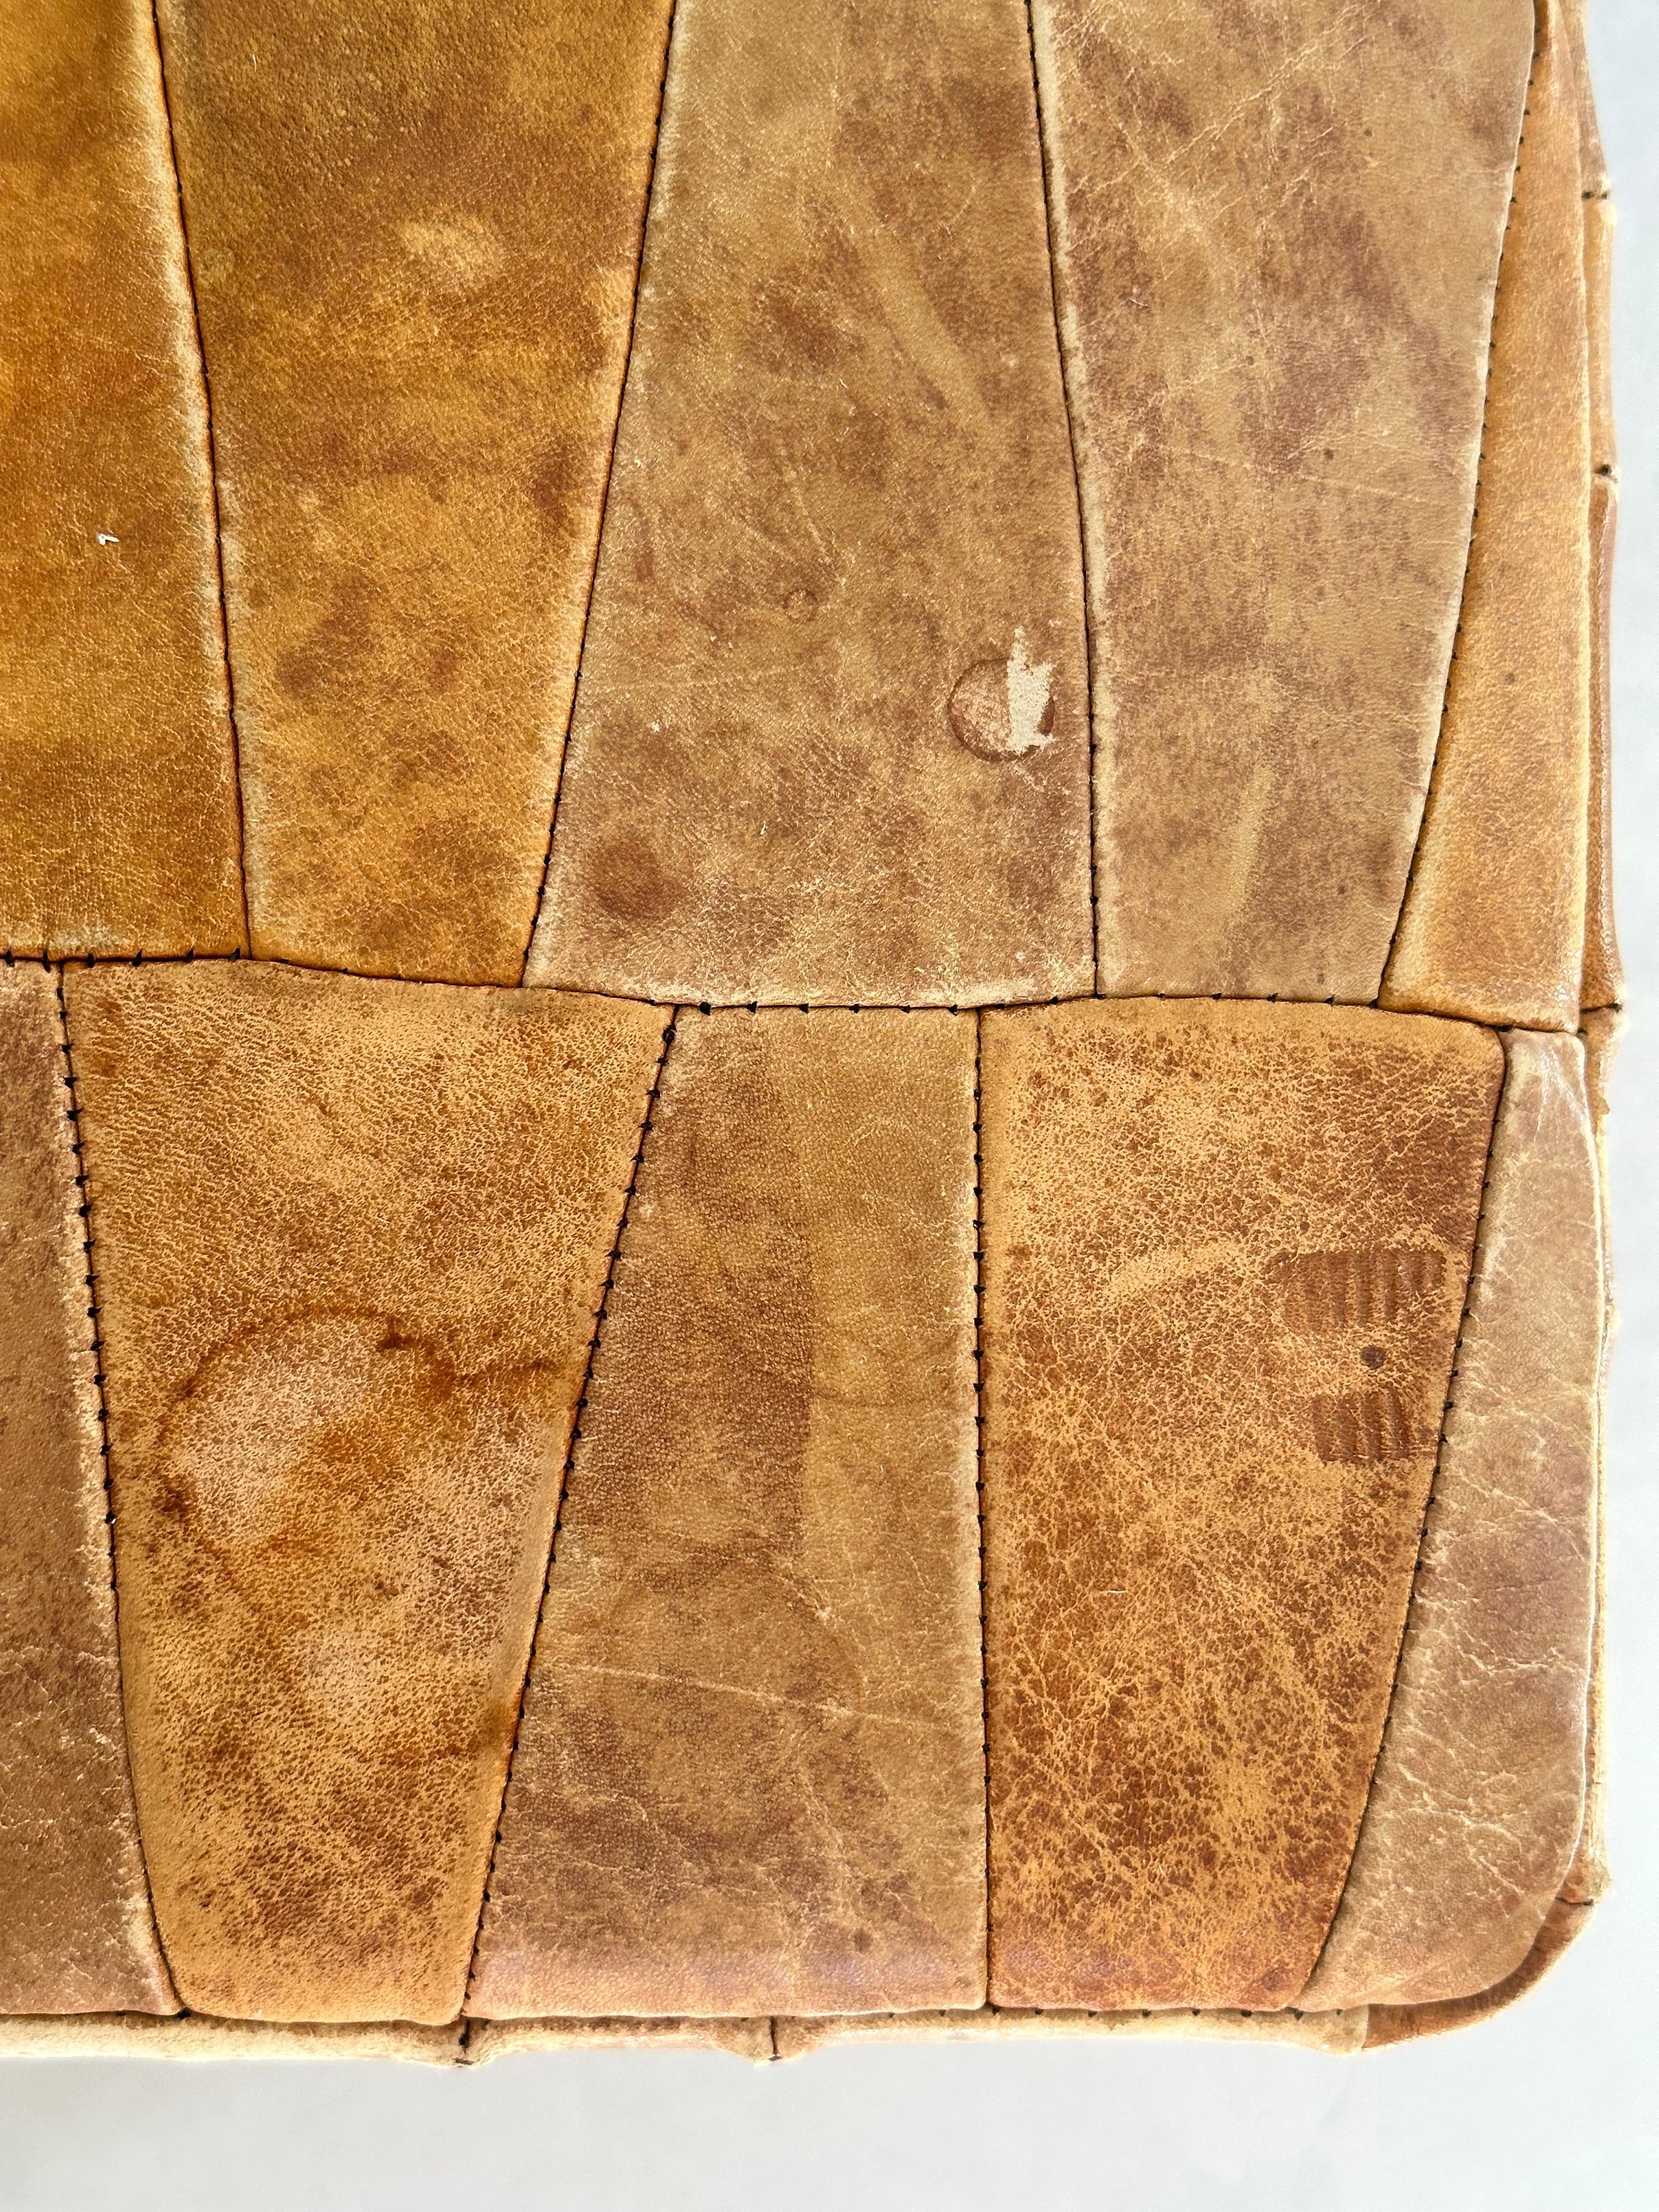 Swiss De Sede Design Camel Leather Patchwork Storage Ottoman, Switzerland 1970s